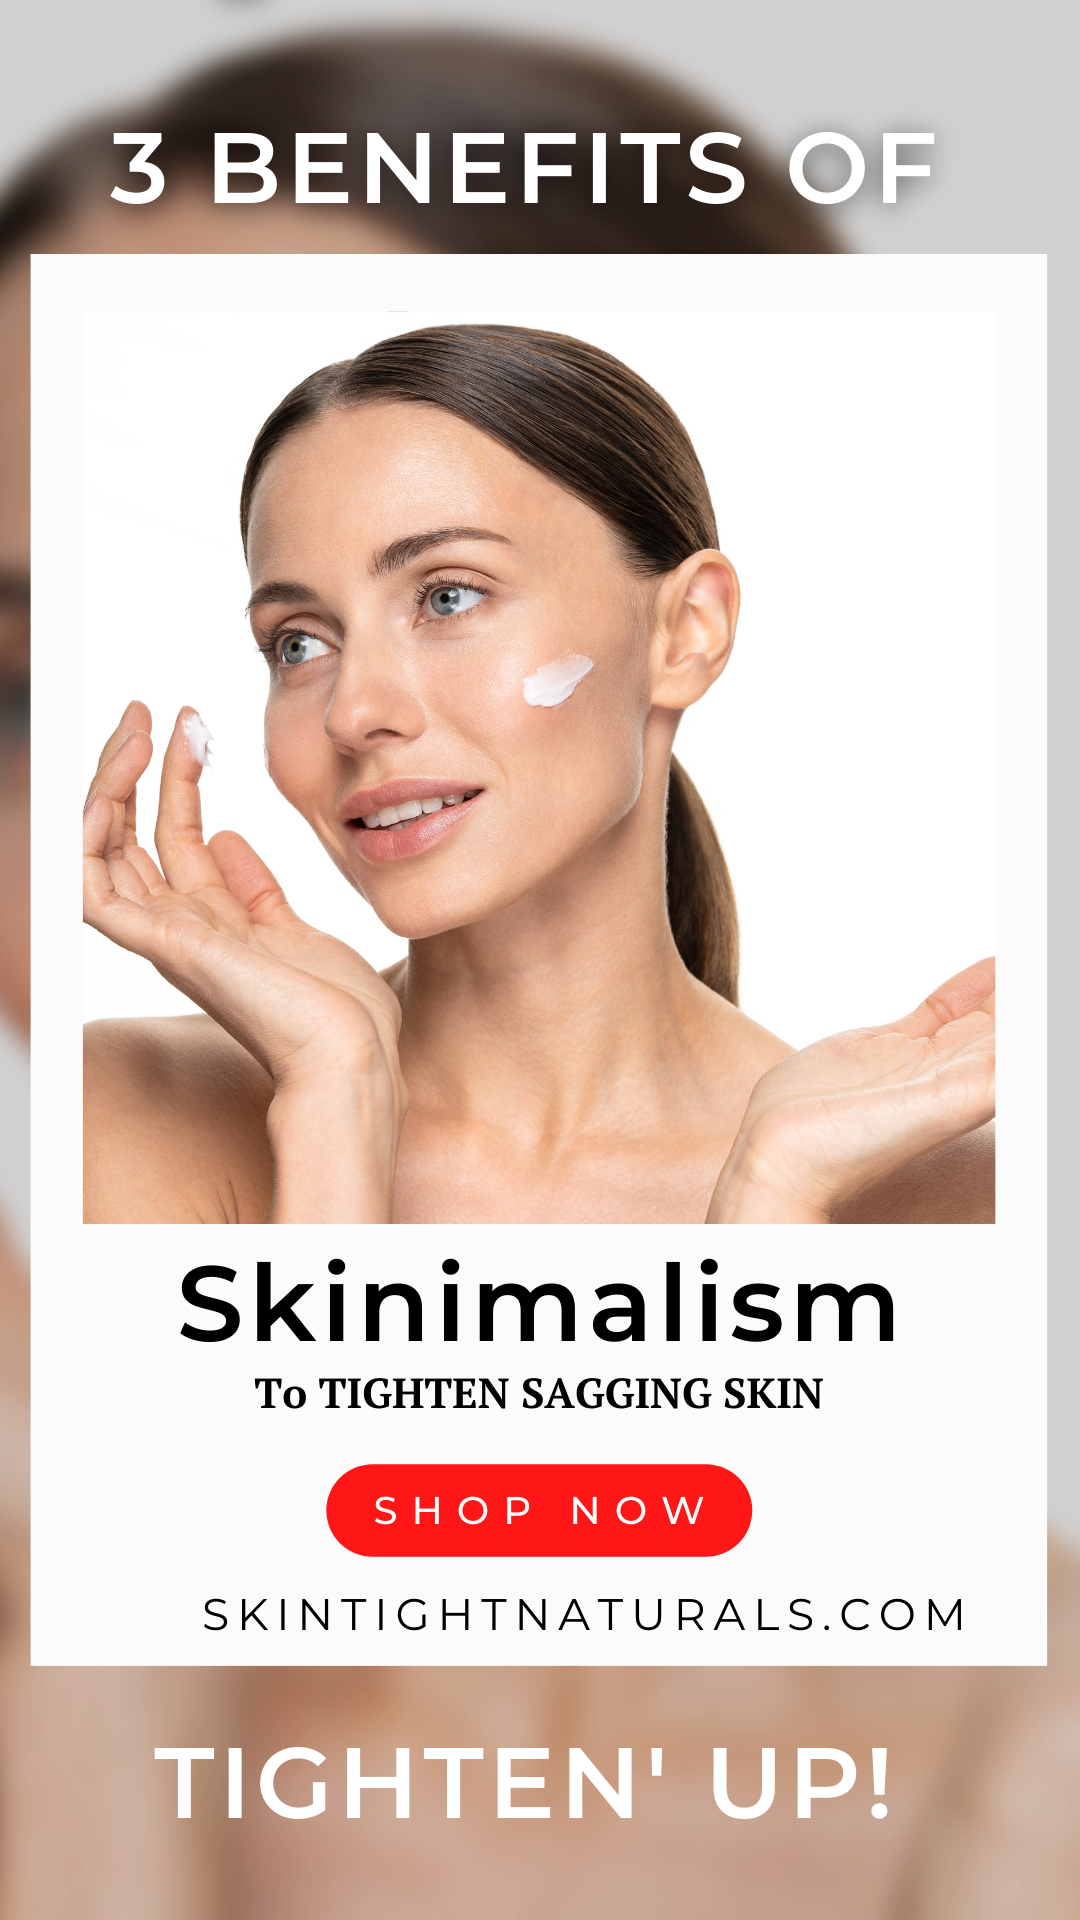 3 Benefits of Skinimalism